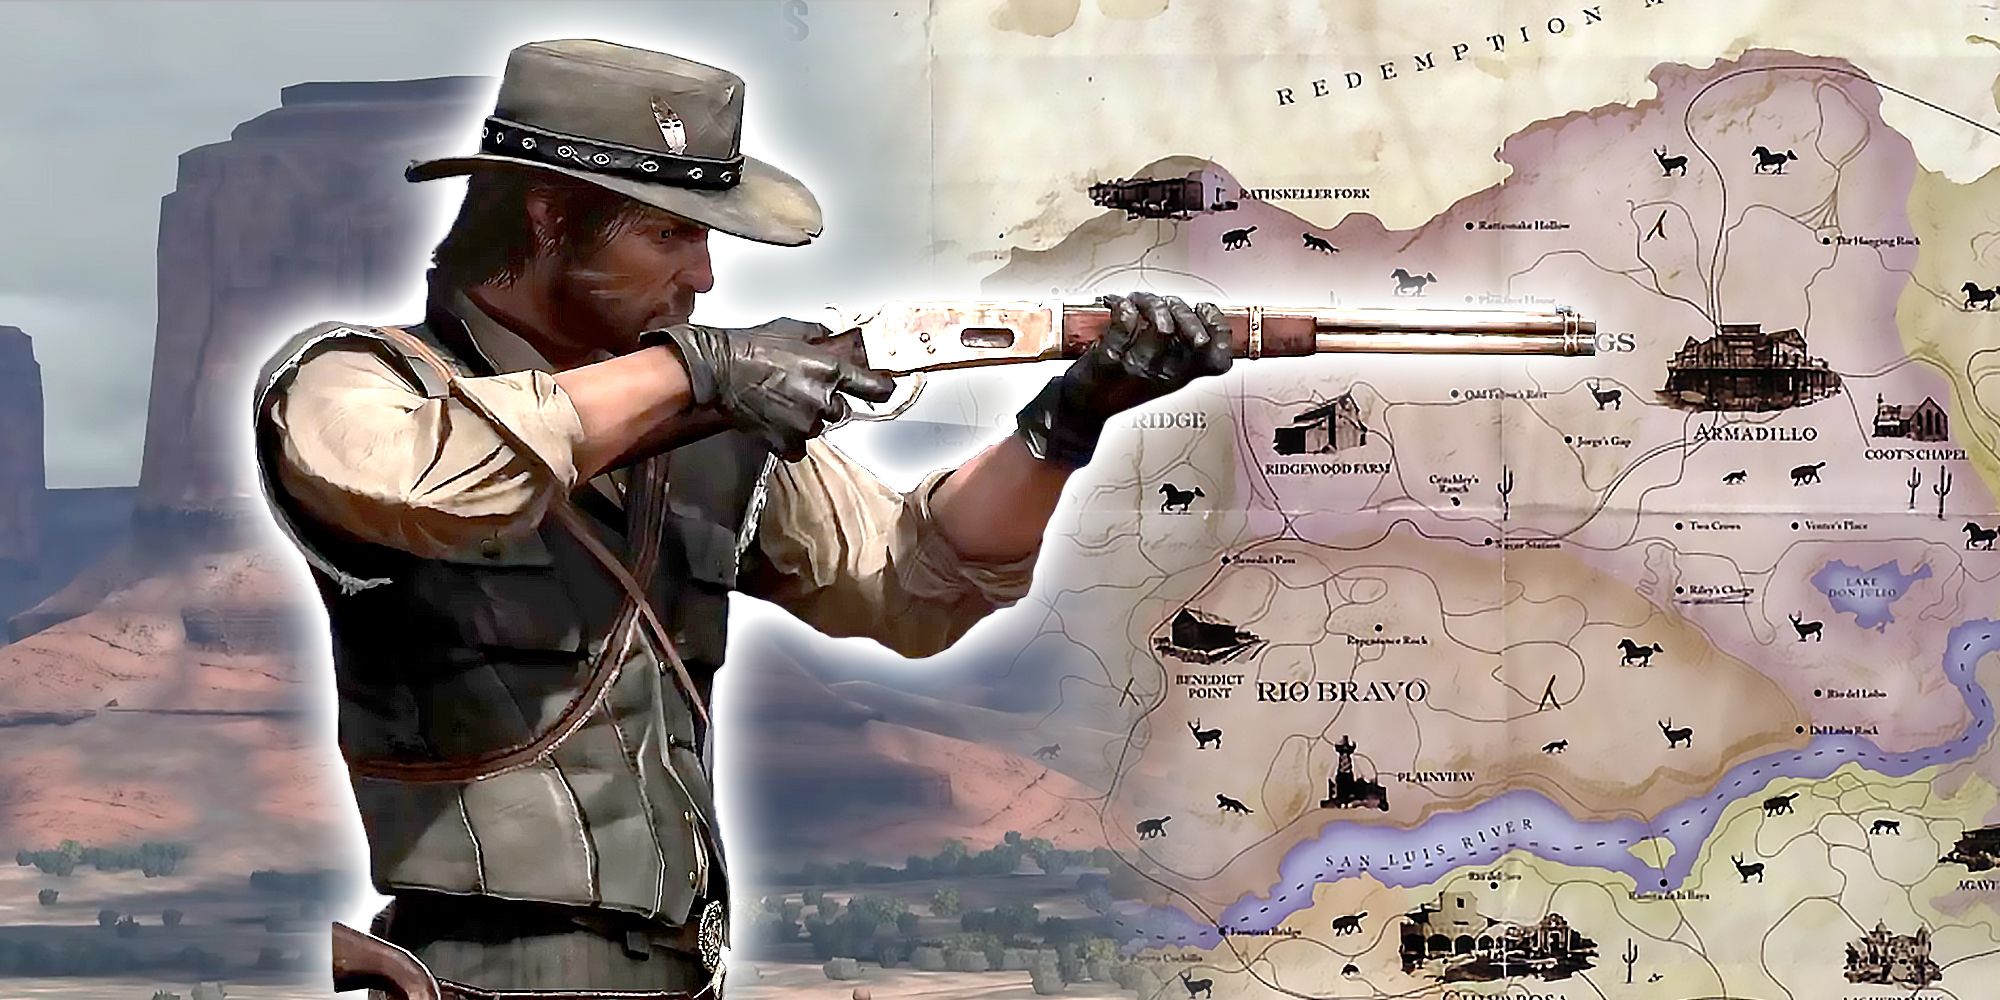 Red Dead Redemption: Complete Master Hunter Guide